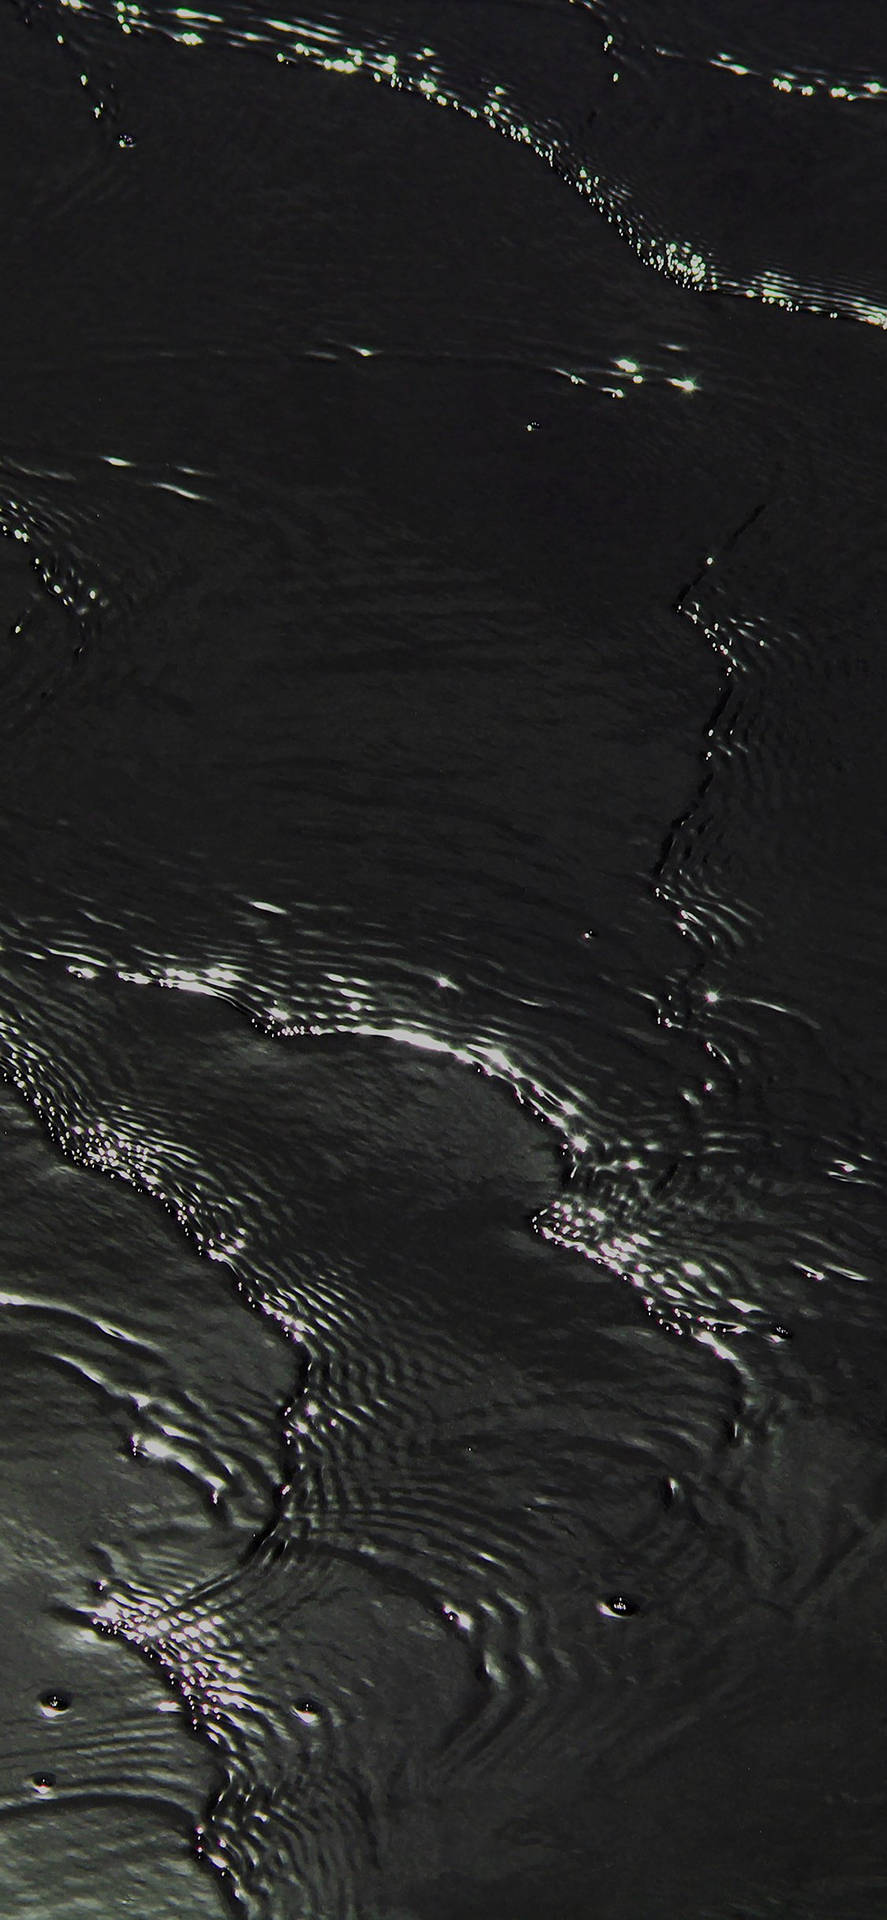 Deep Black Rippling Water Wallpaper